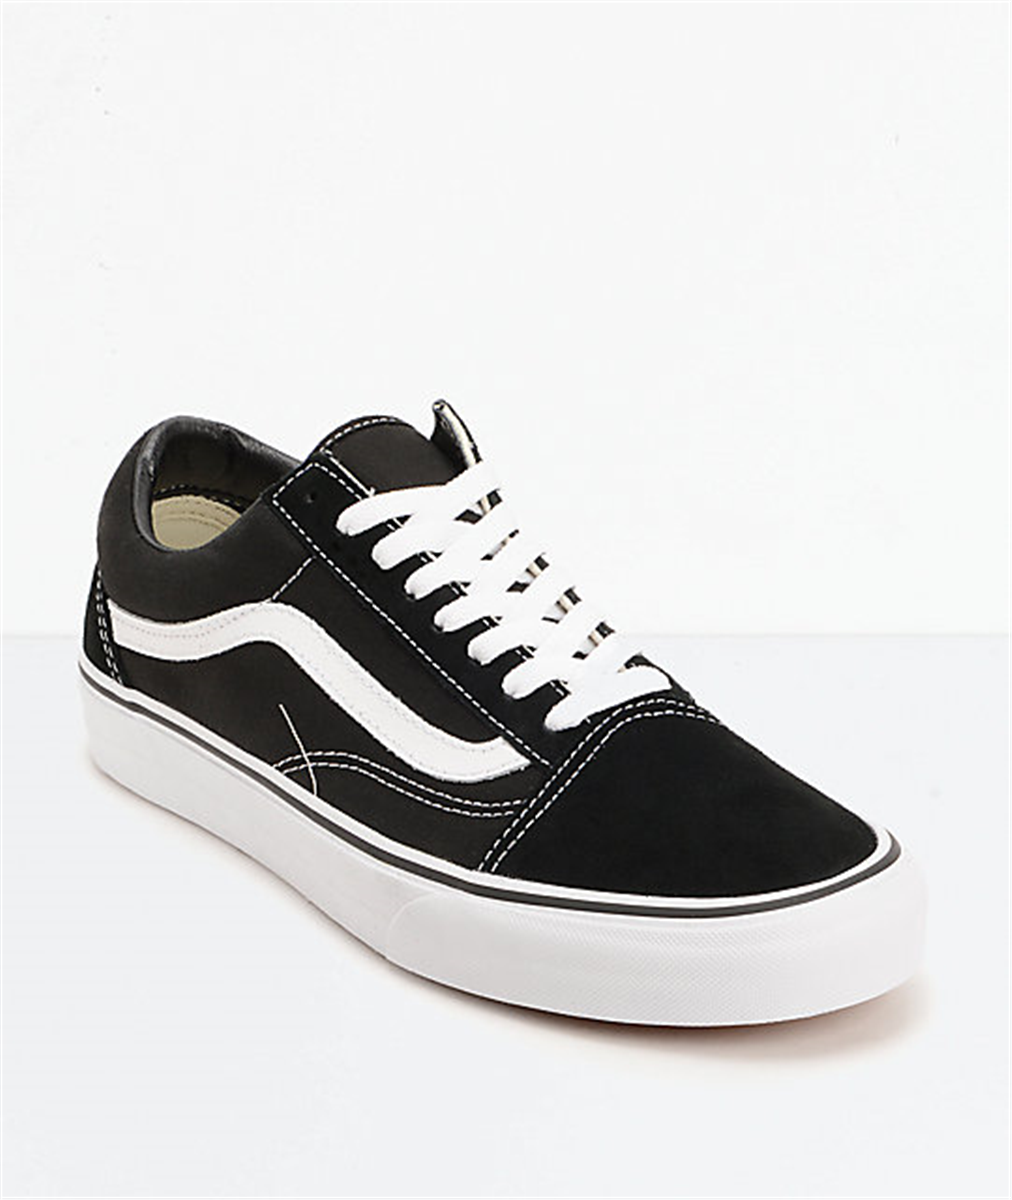 Vans Classics Plus Old Skool Youth Shoe, Black True White | Underground ...